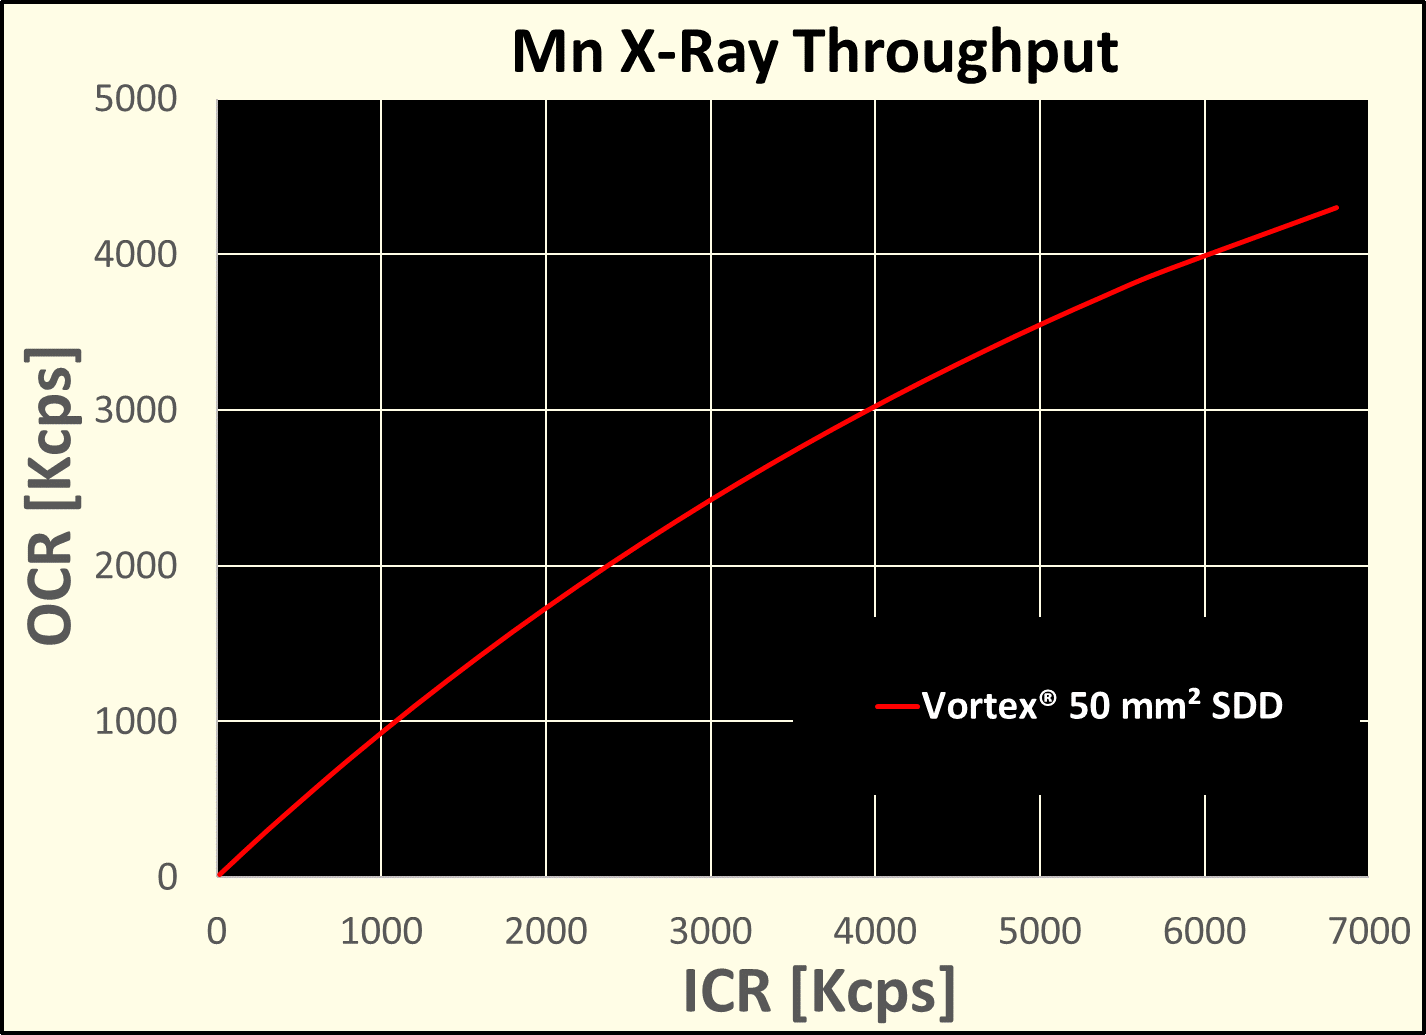 Throughput (OCR vs ICR) for Vortex® SDD sensors